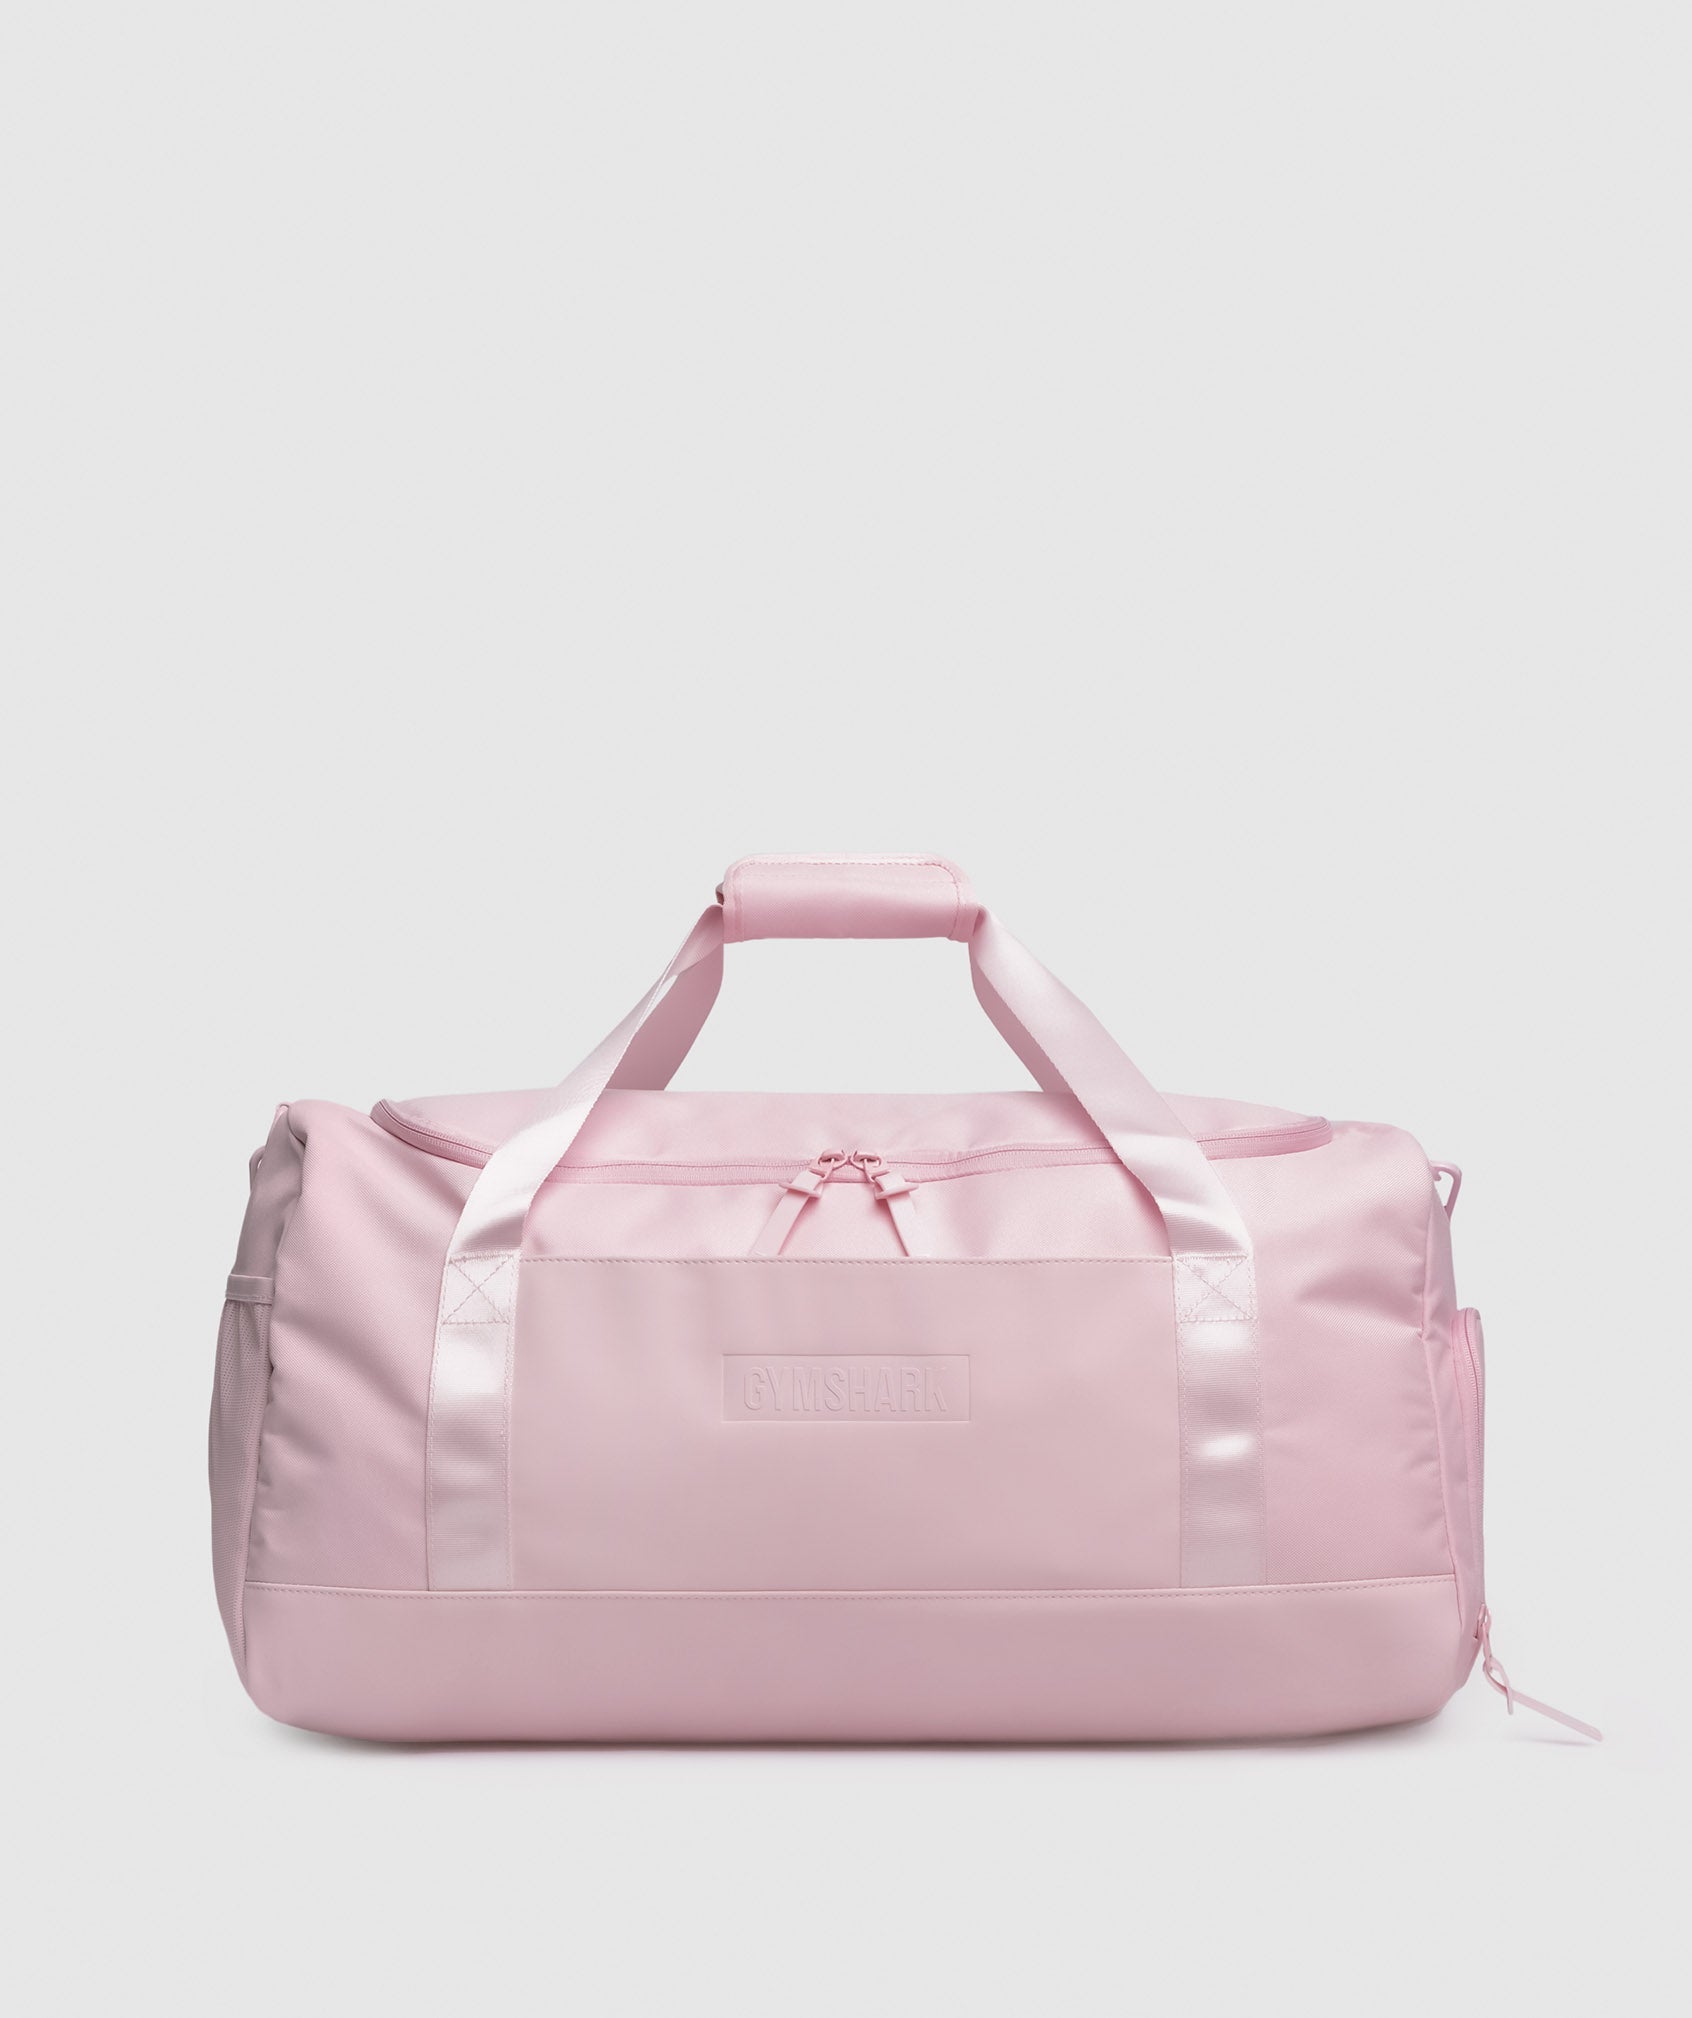 Gymshark Everyday Gym Bag Small - Lemonade Pink